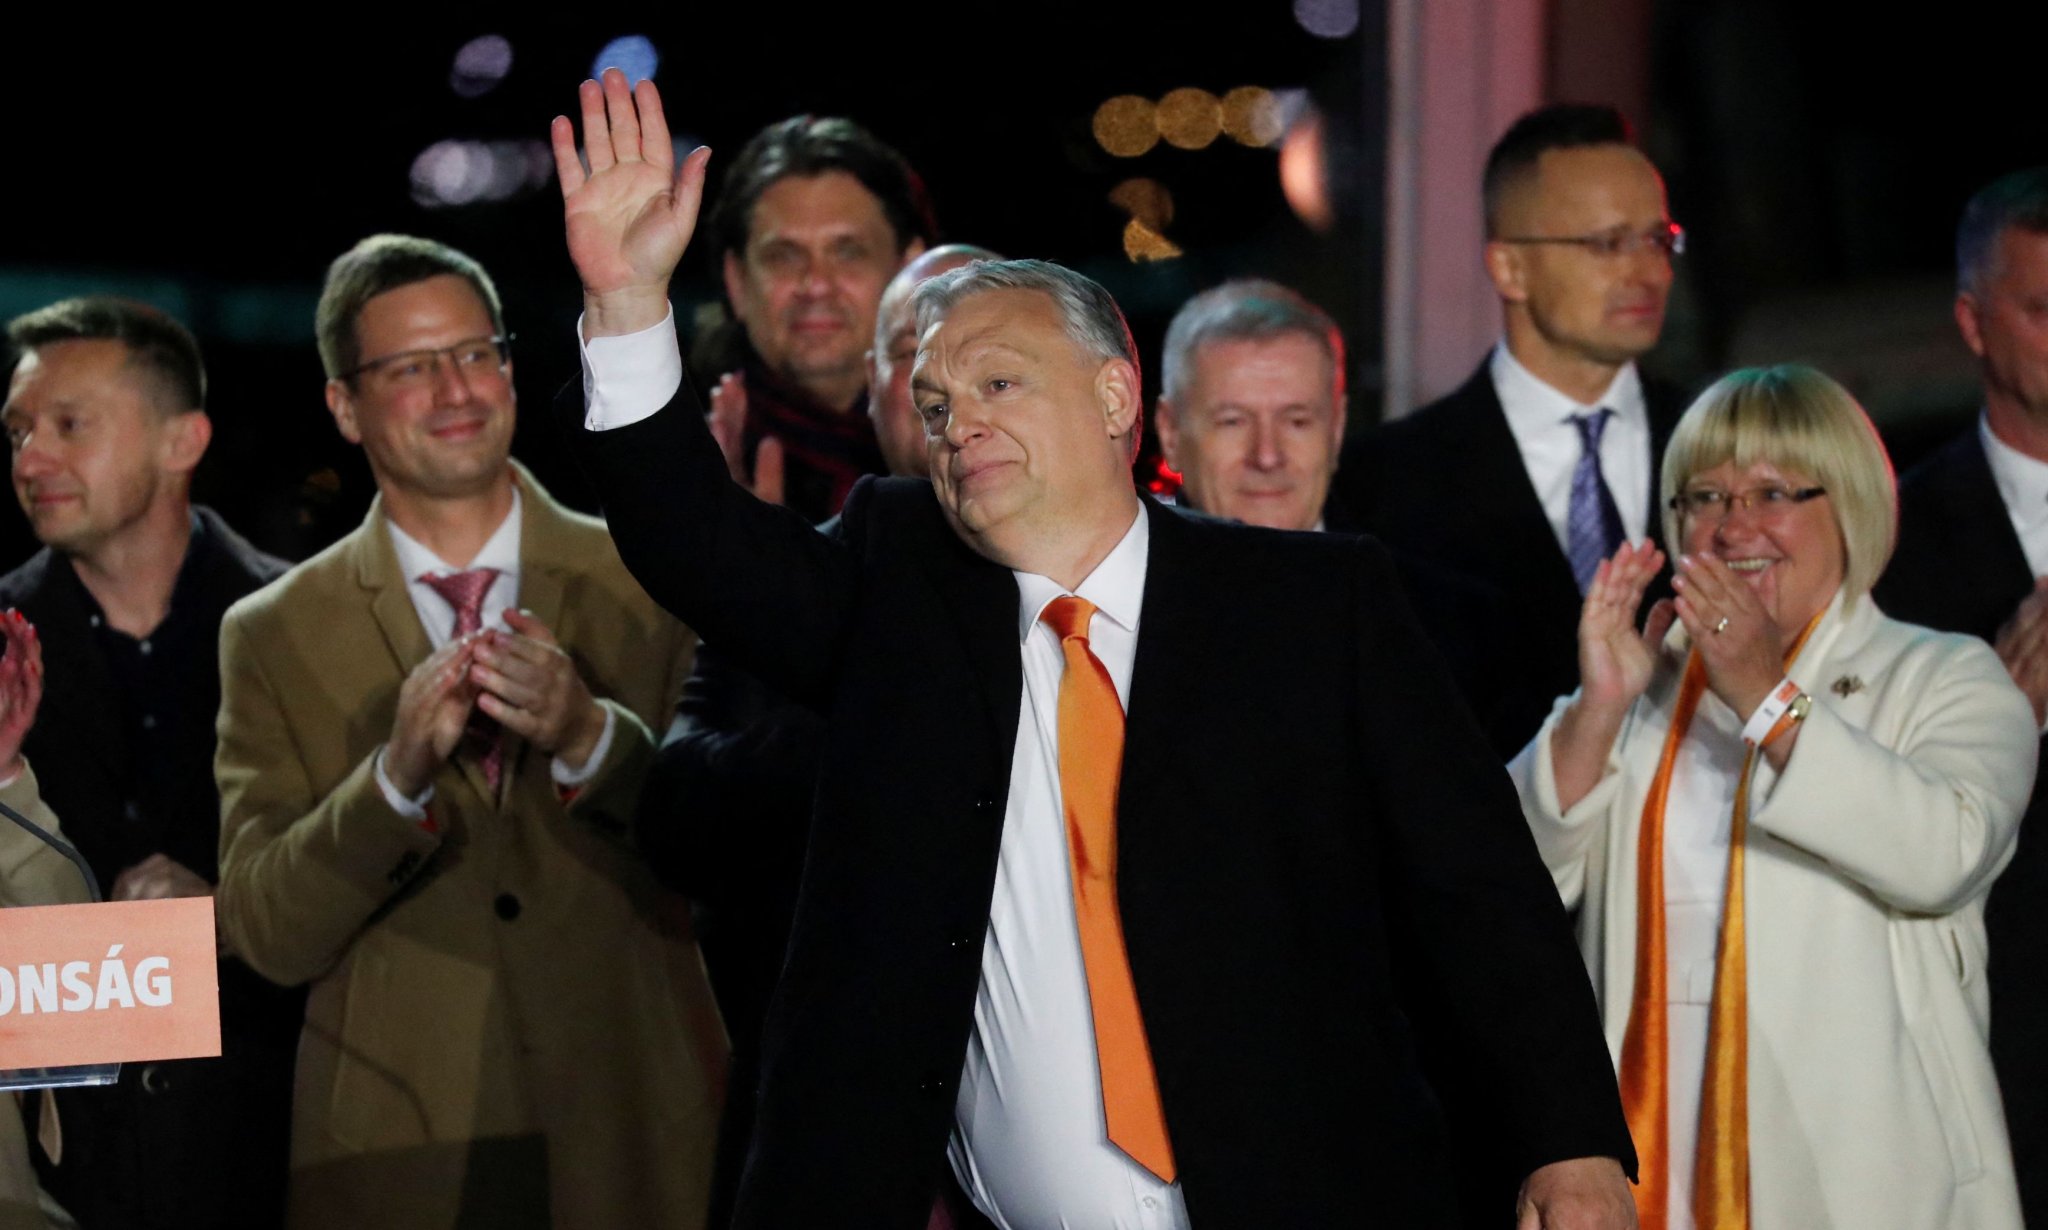 Viktor Orbán wins fourth consecutive term as Hungary’s prime minister